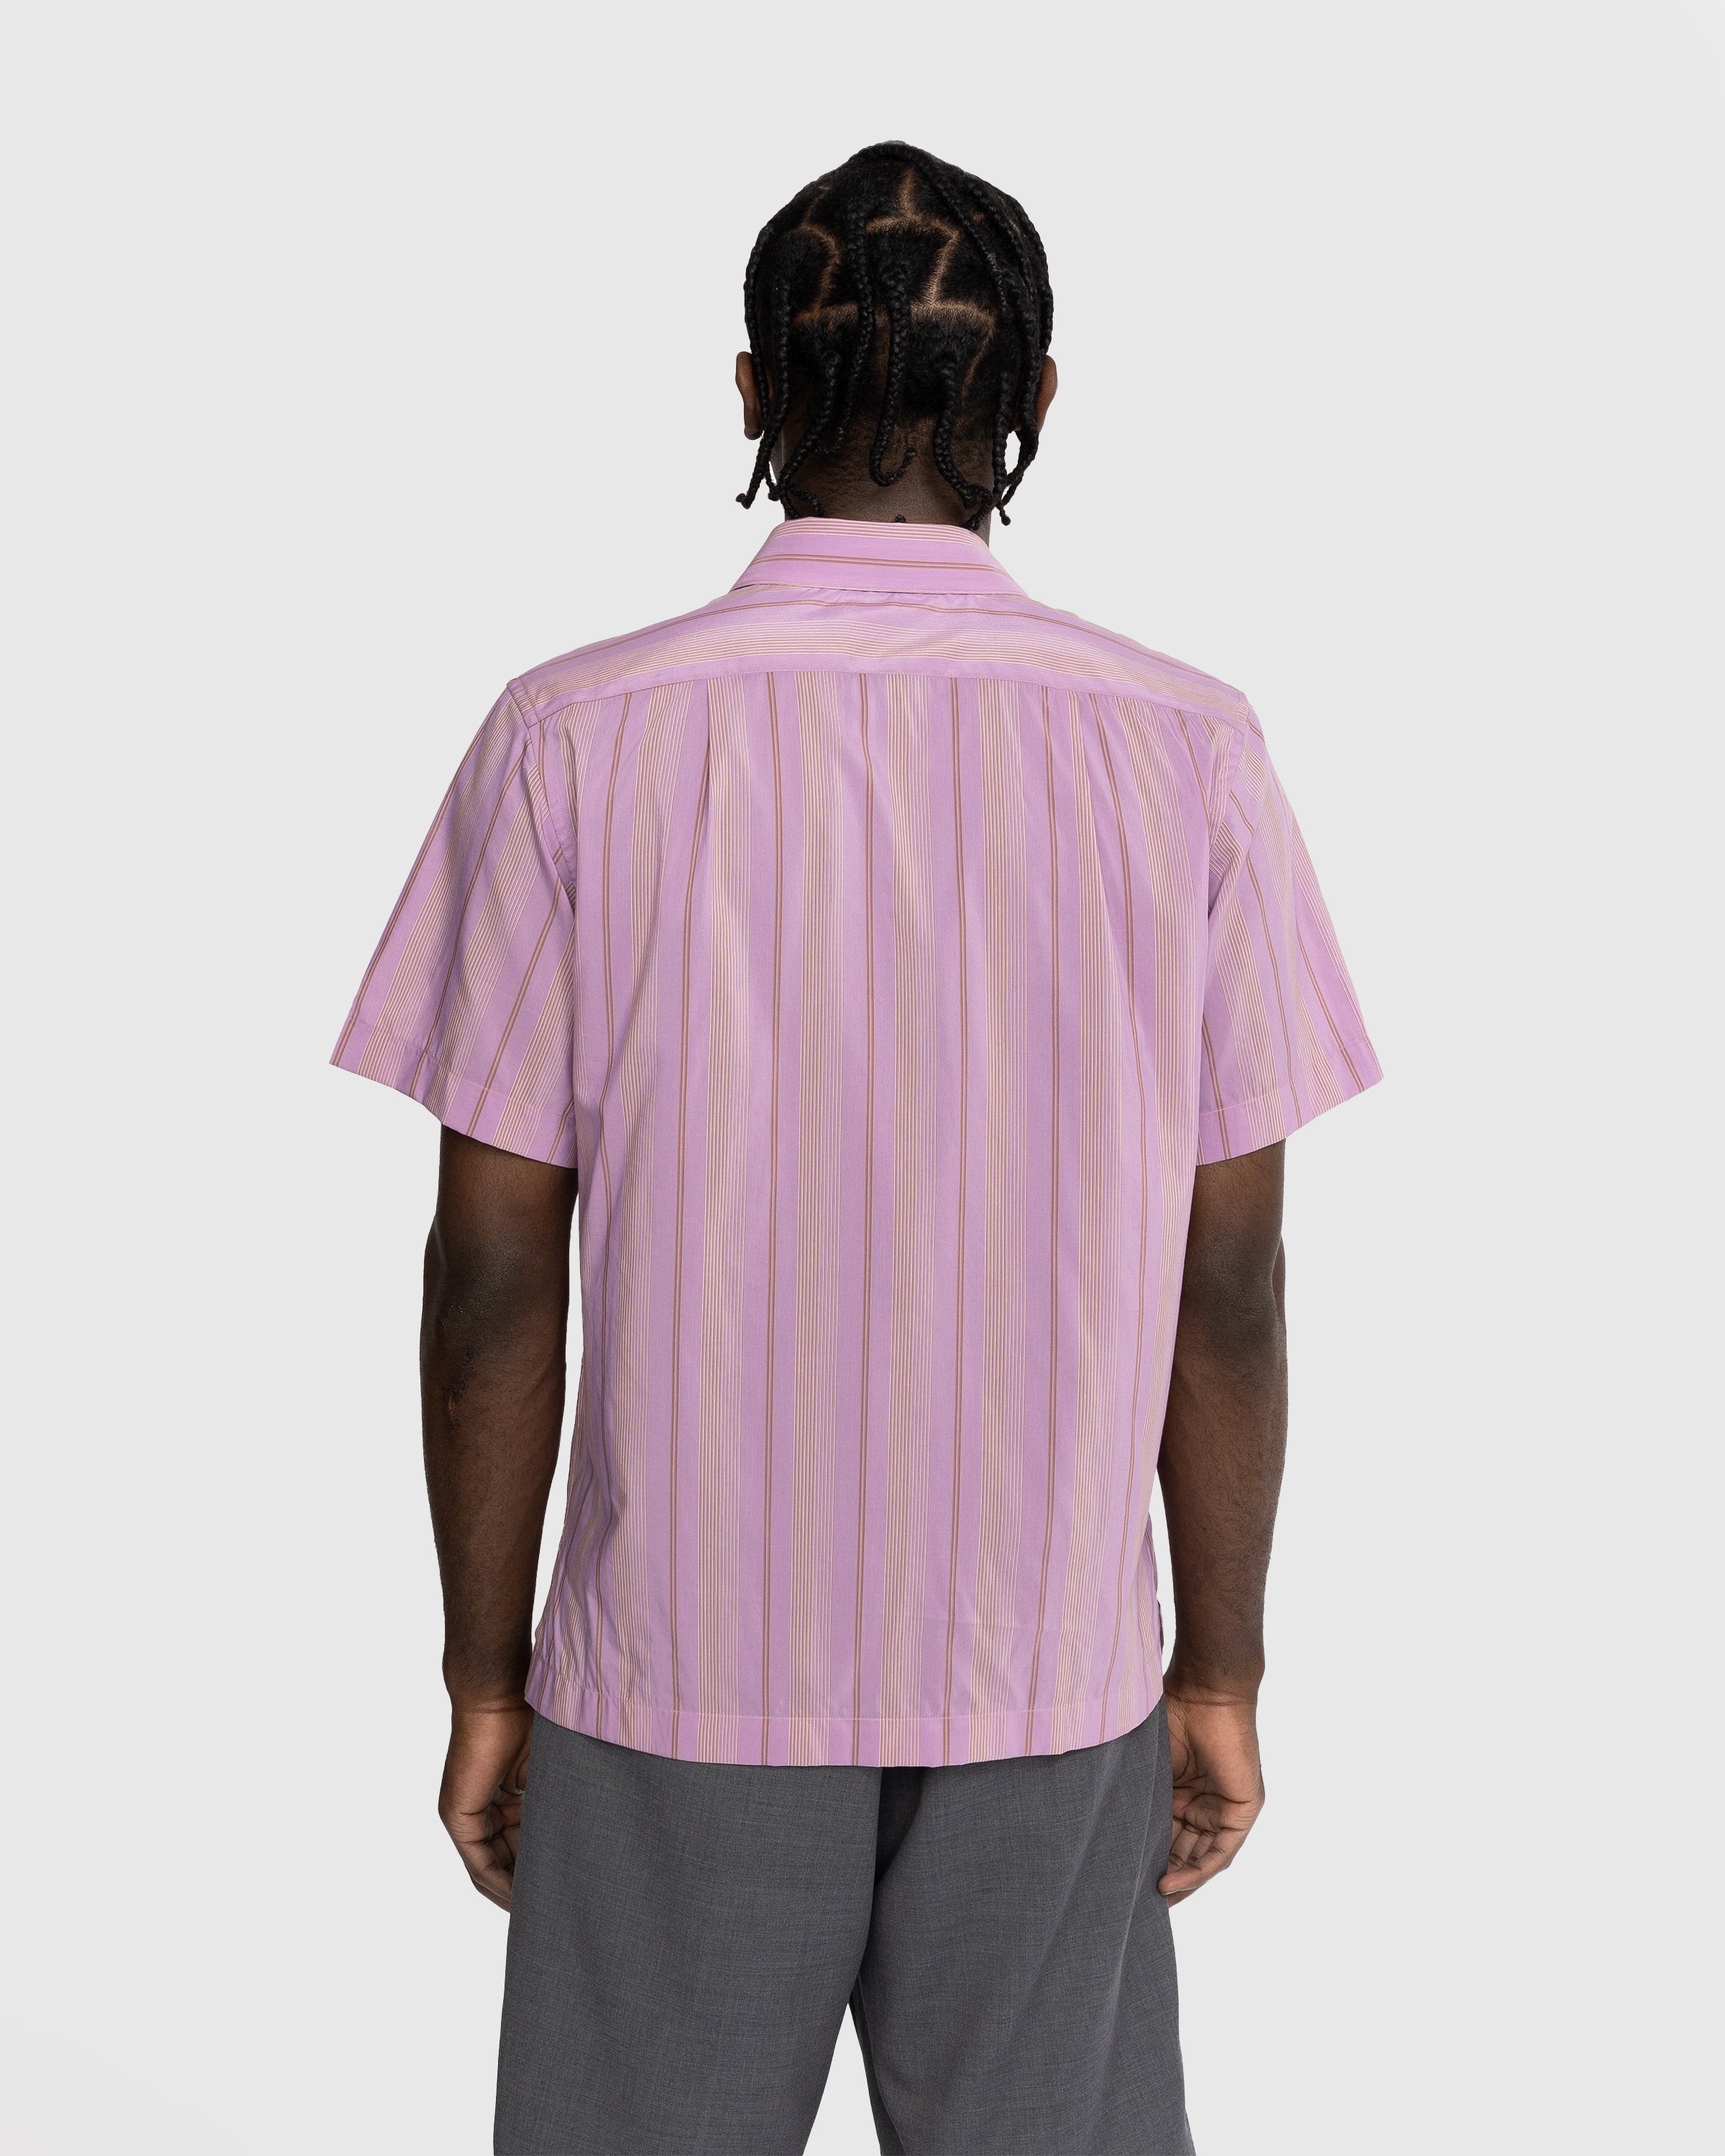 Wales Bonner - Rhythm Striped Shirt Pink - Clothing - Pink - Image 3